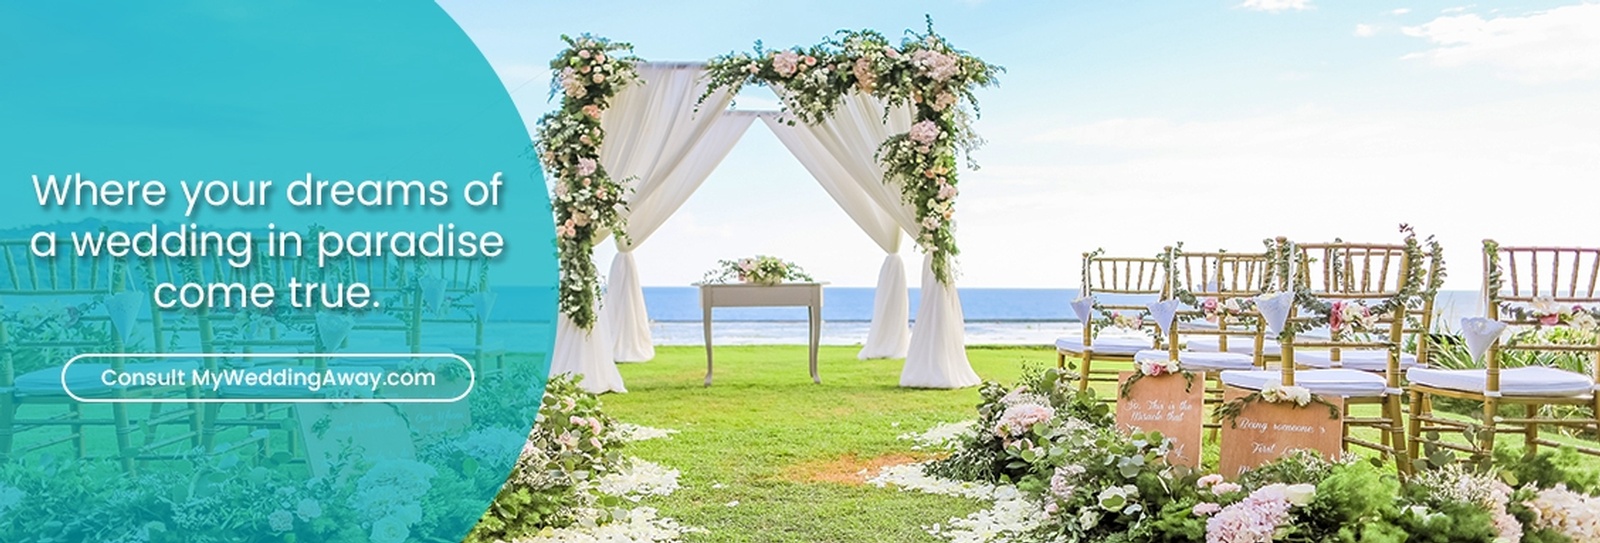 Ontario Wedding planner gets your dreams of wedding in a paradise come true